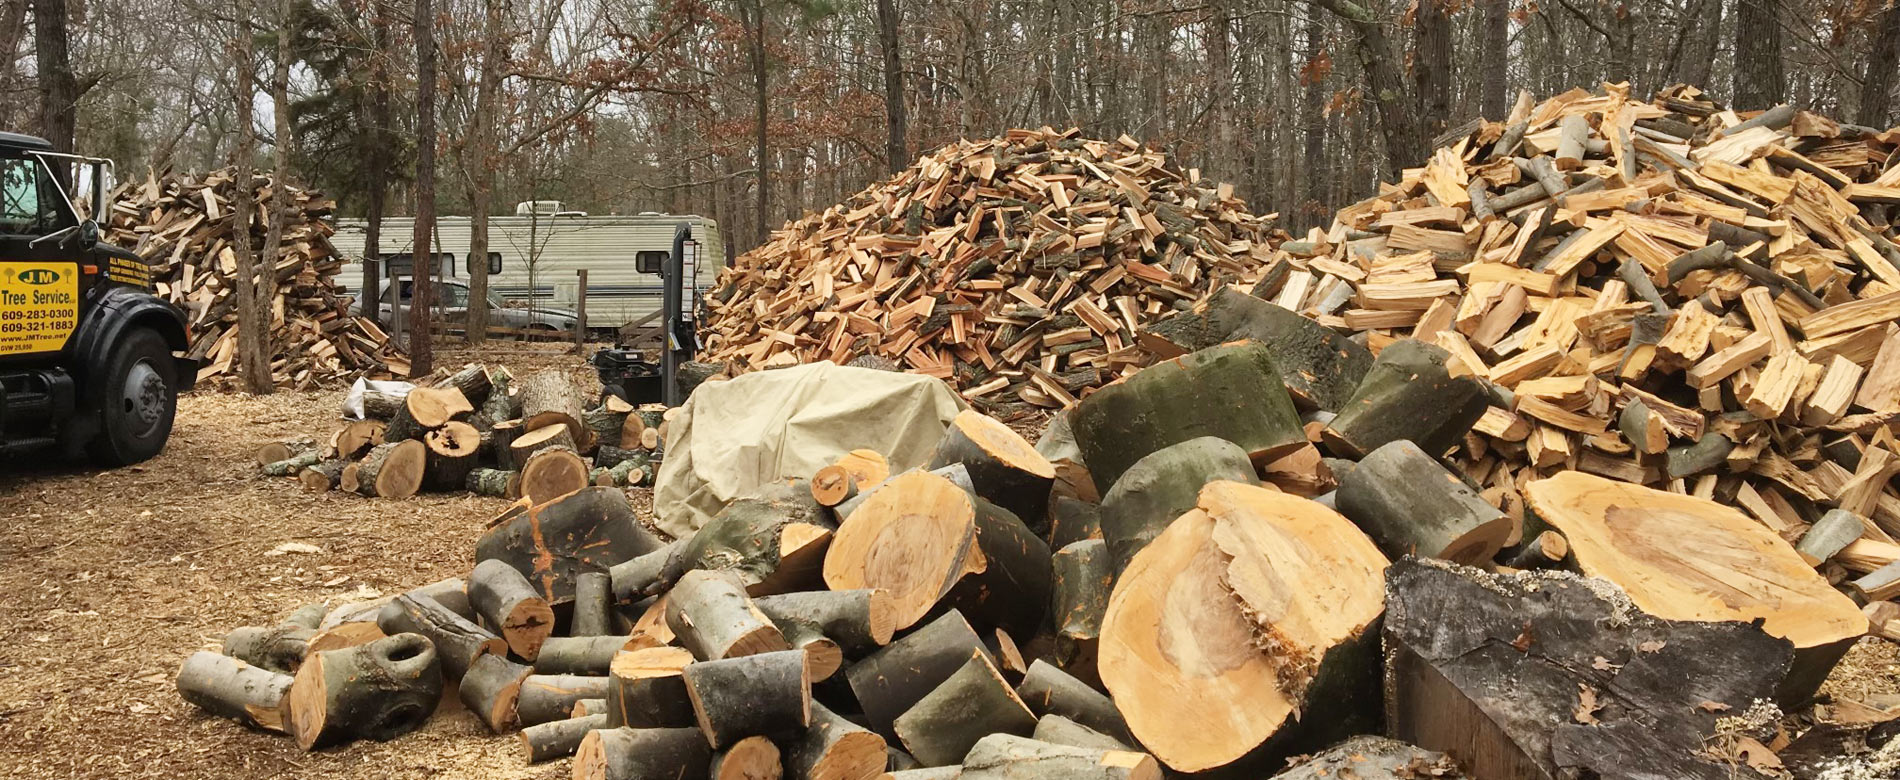 Firewood | South Jersey | J.M. Tree & Landscape Service, LLC